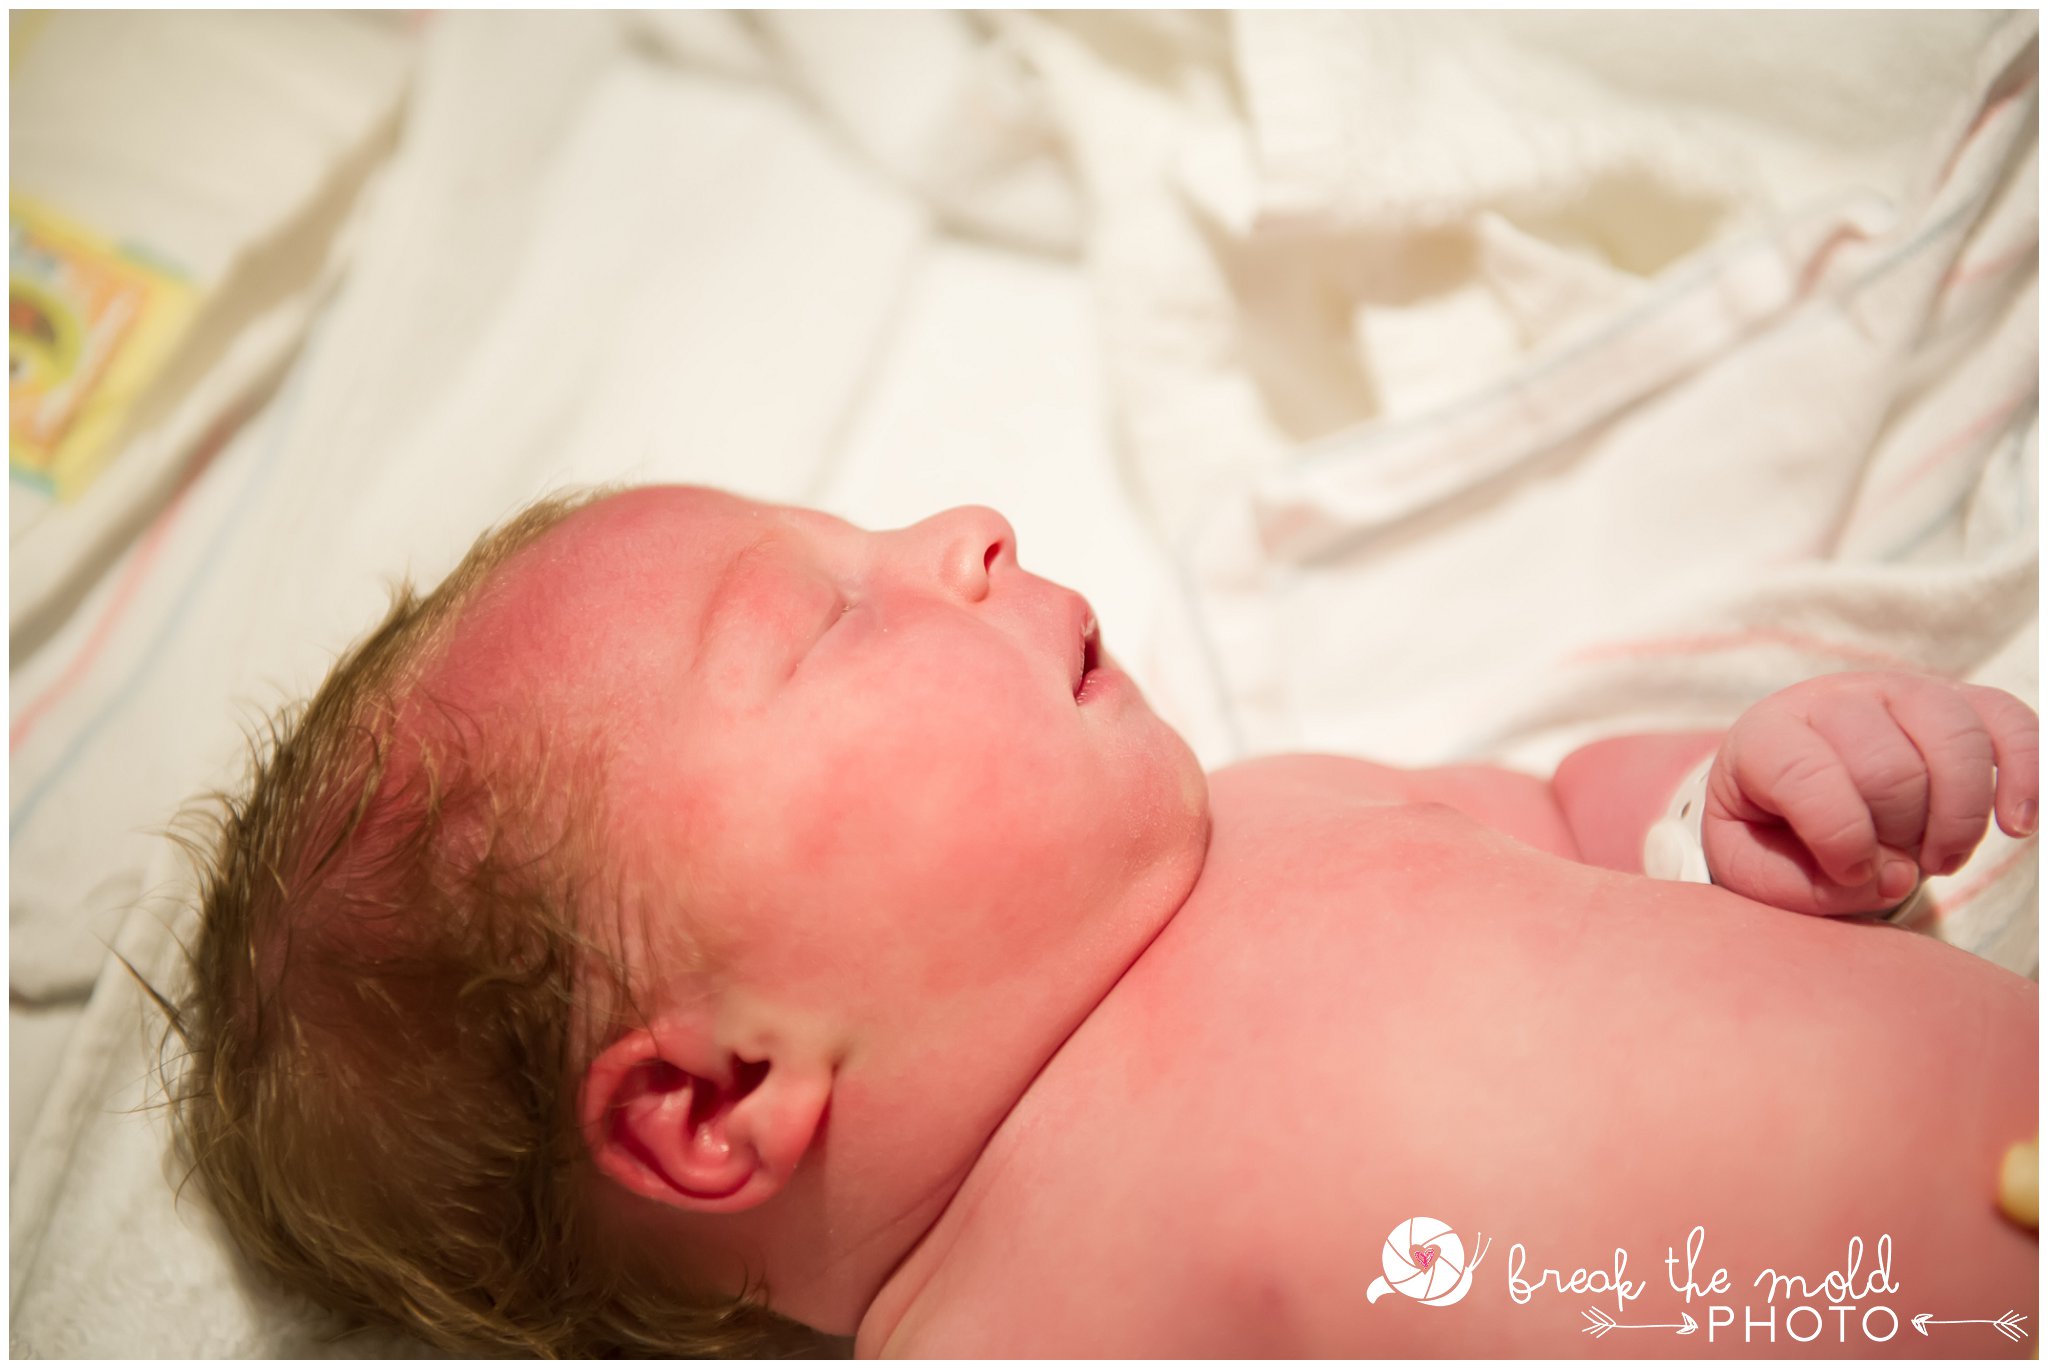 fresh-24-newborn-in-hospital-break-the-mold-photo-baby-girl-sweet-in-room-photos (5).jpg